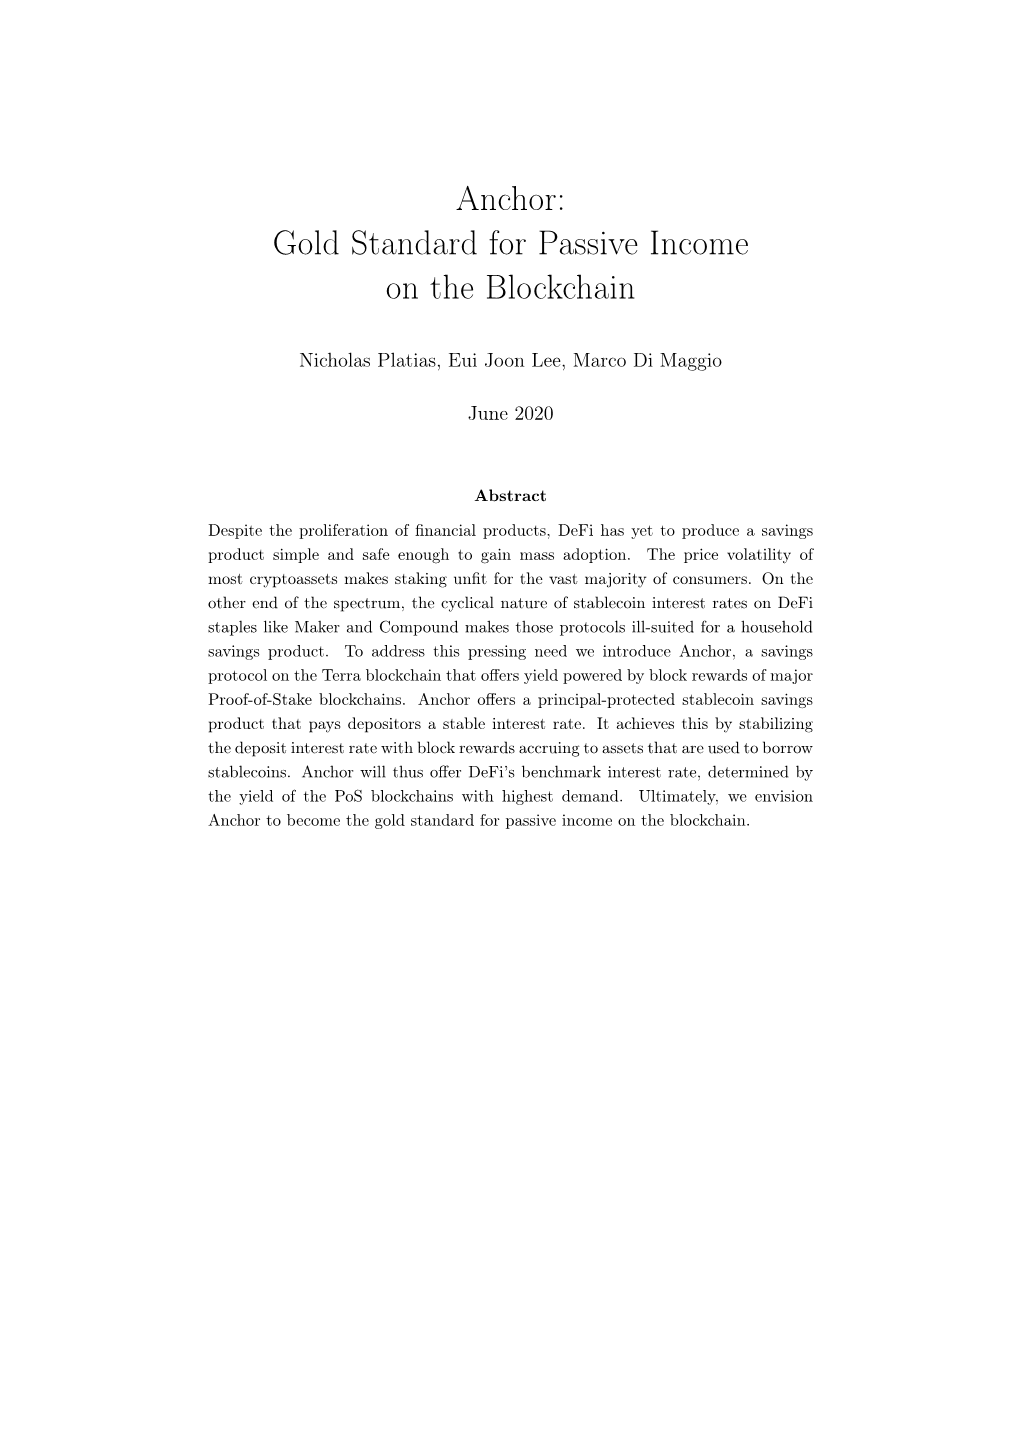 Gold Standard for Passive Income on the Blockchain